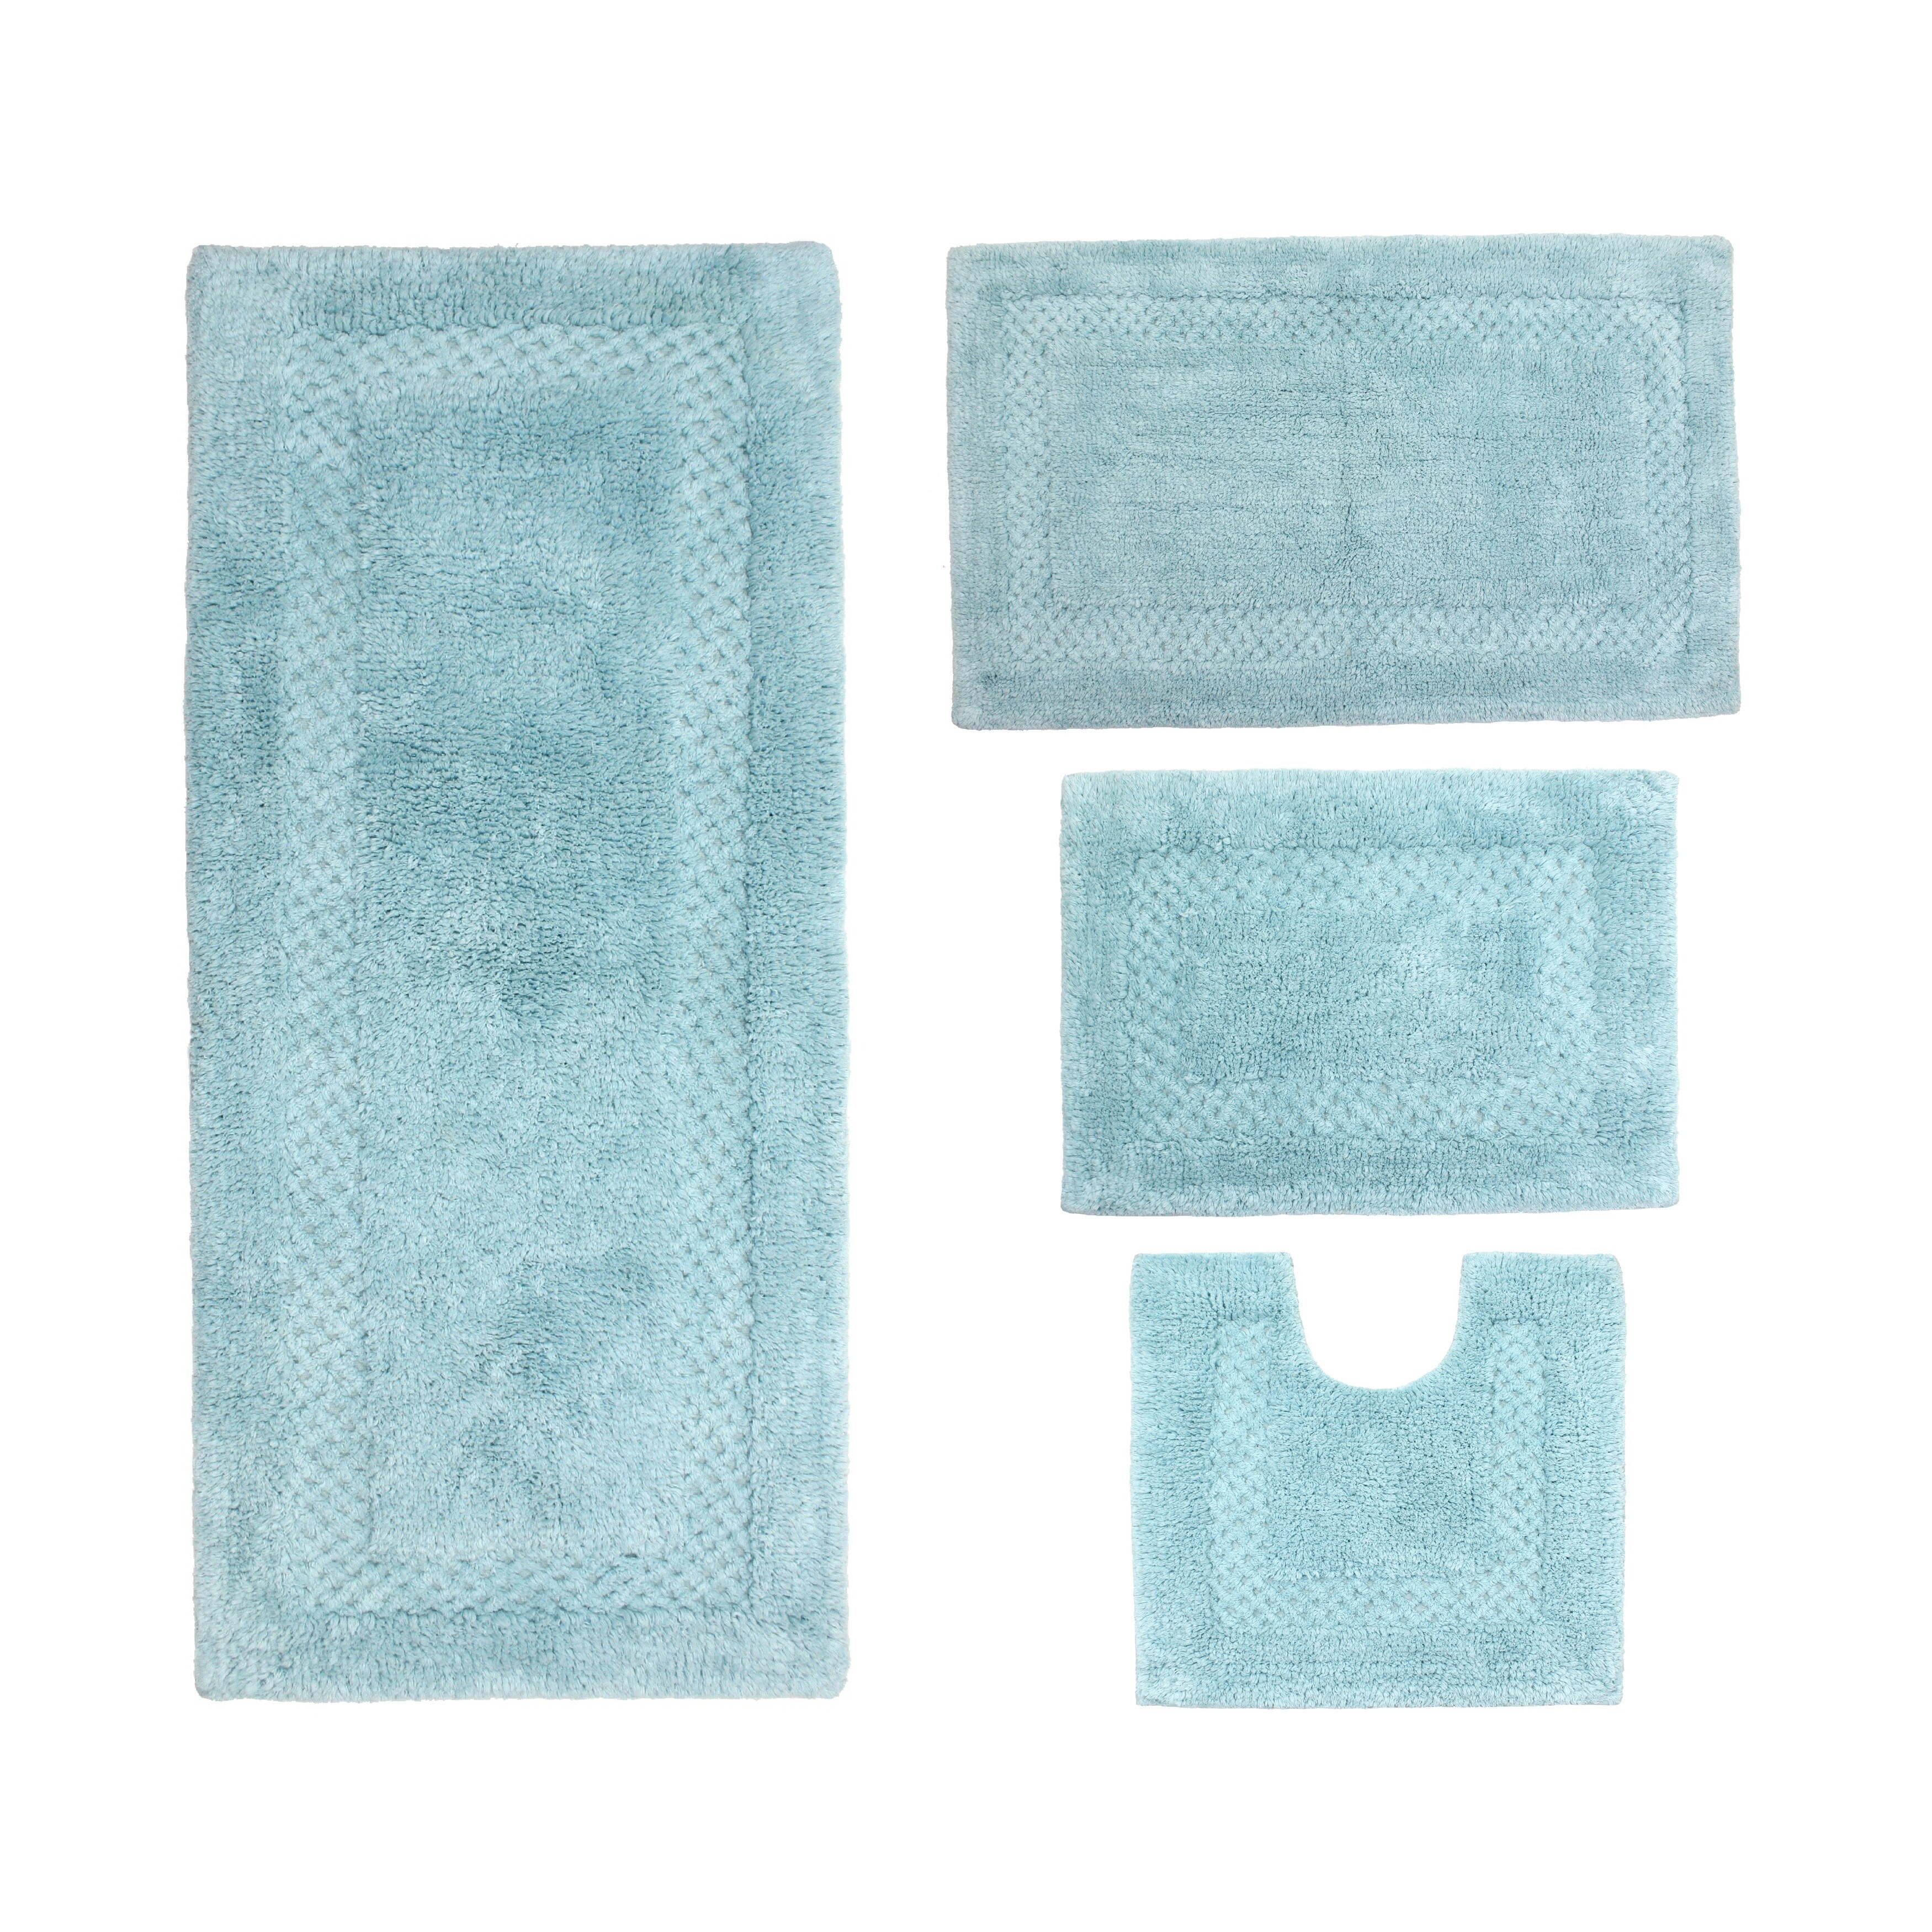 Home Weavers Classy Bathmat Collection - Absorbent Cotton Soft Bath Rug Machine Washable 21 inchx54 inch Aqua Size 21 x 54 Blue